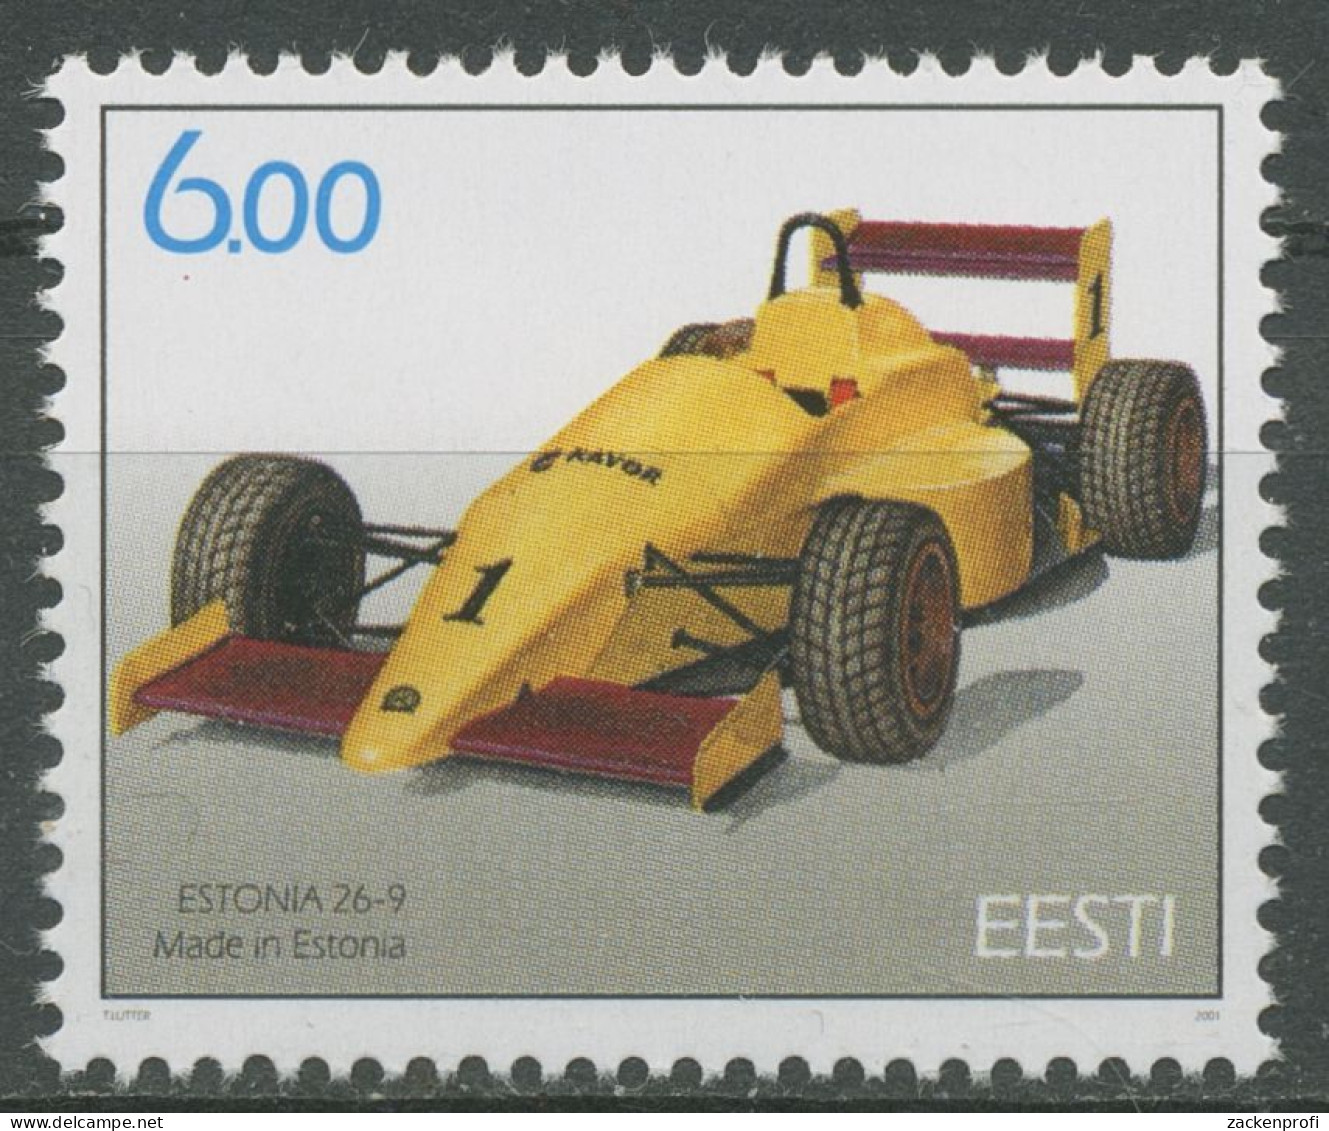 Estland 2001 Motorsport Rennwagen Estonia 420 Postfrisch - Estonia